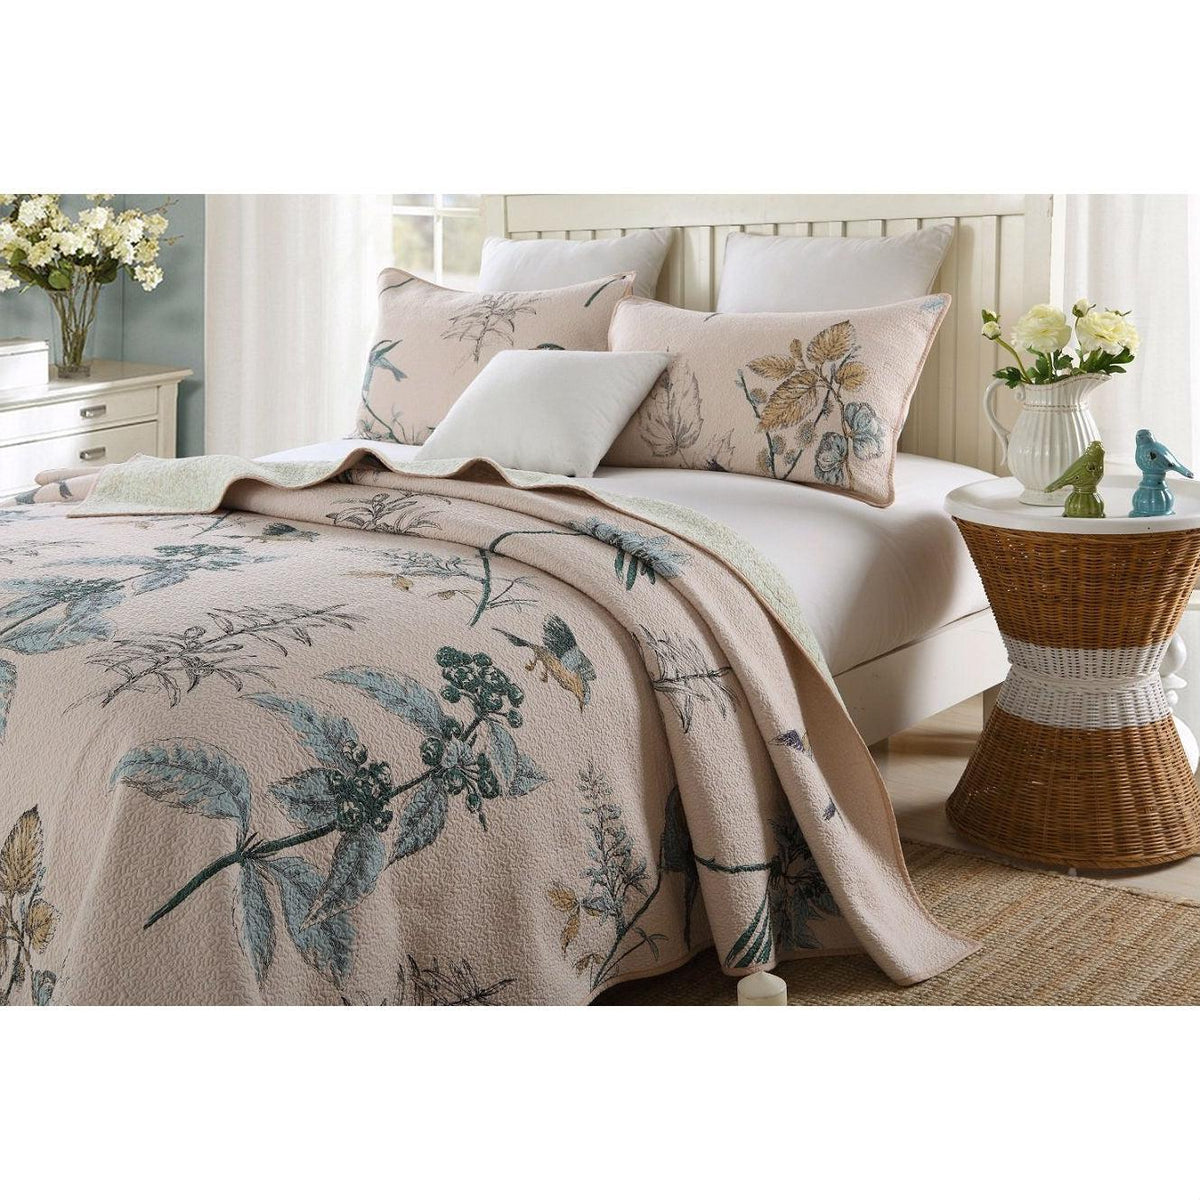 Full size 3-Piece 100-Percent Cotton Quilt Bedspread Set with Floral Birds Pattern - beddingbag.com